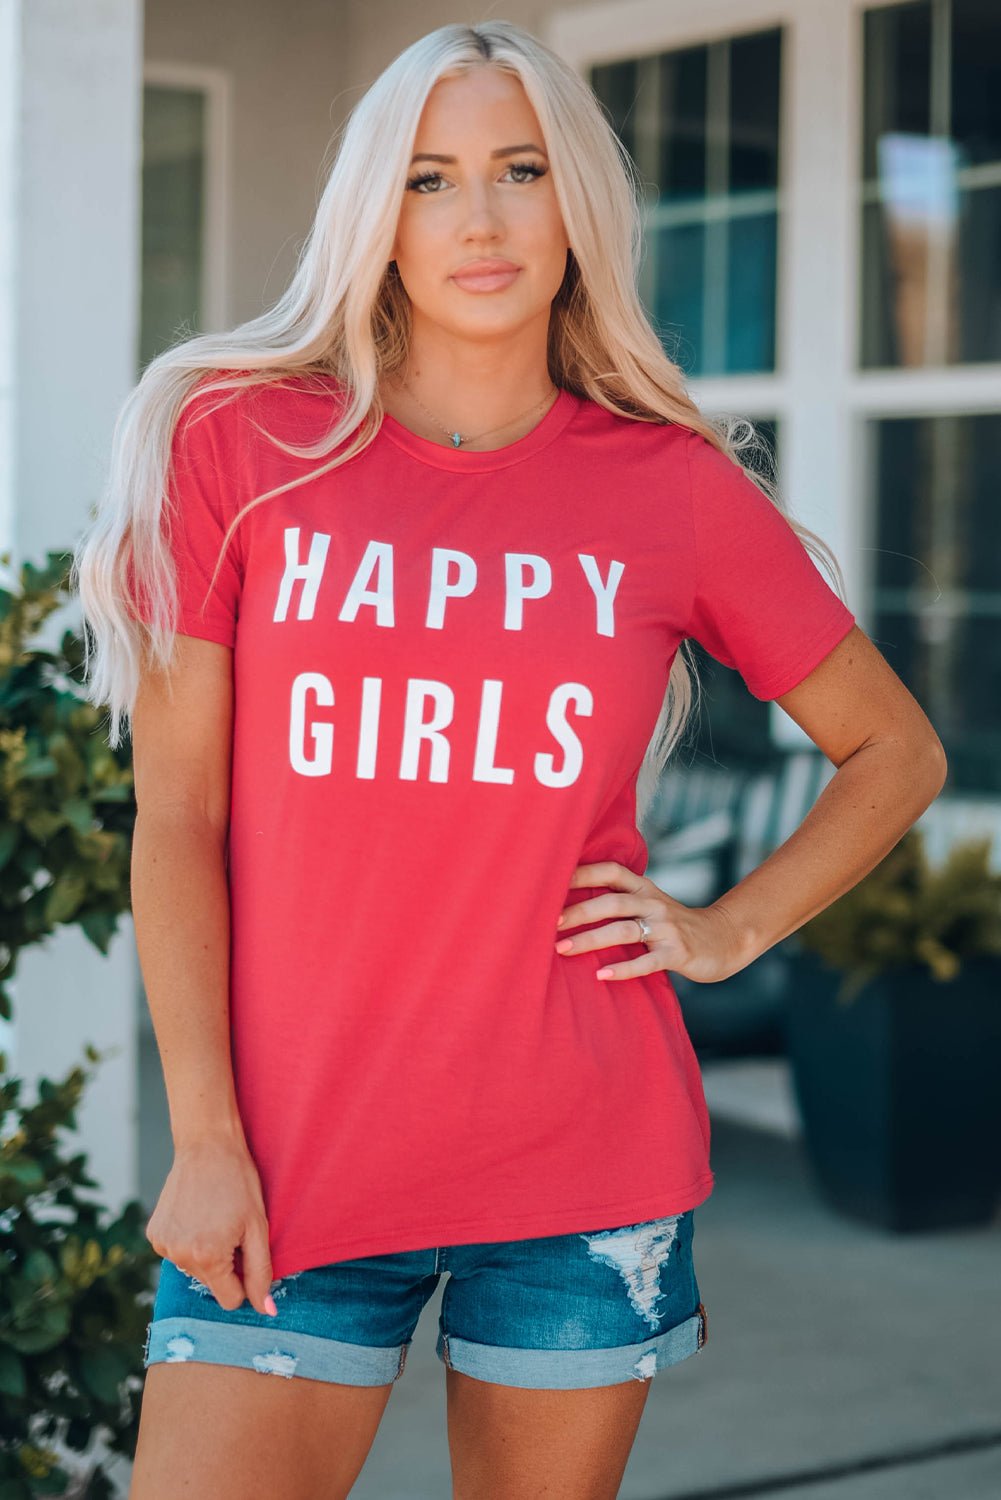 HAPPY GIRLS Short Sleeve Tee Shirt - Talk to the tee store